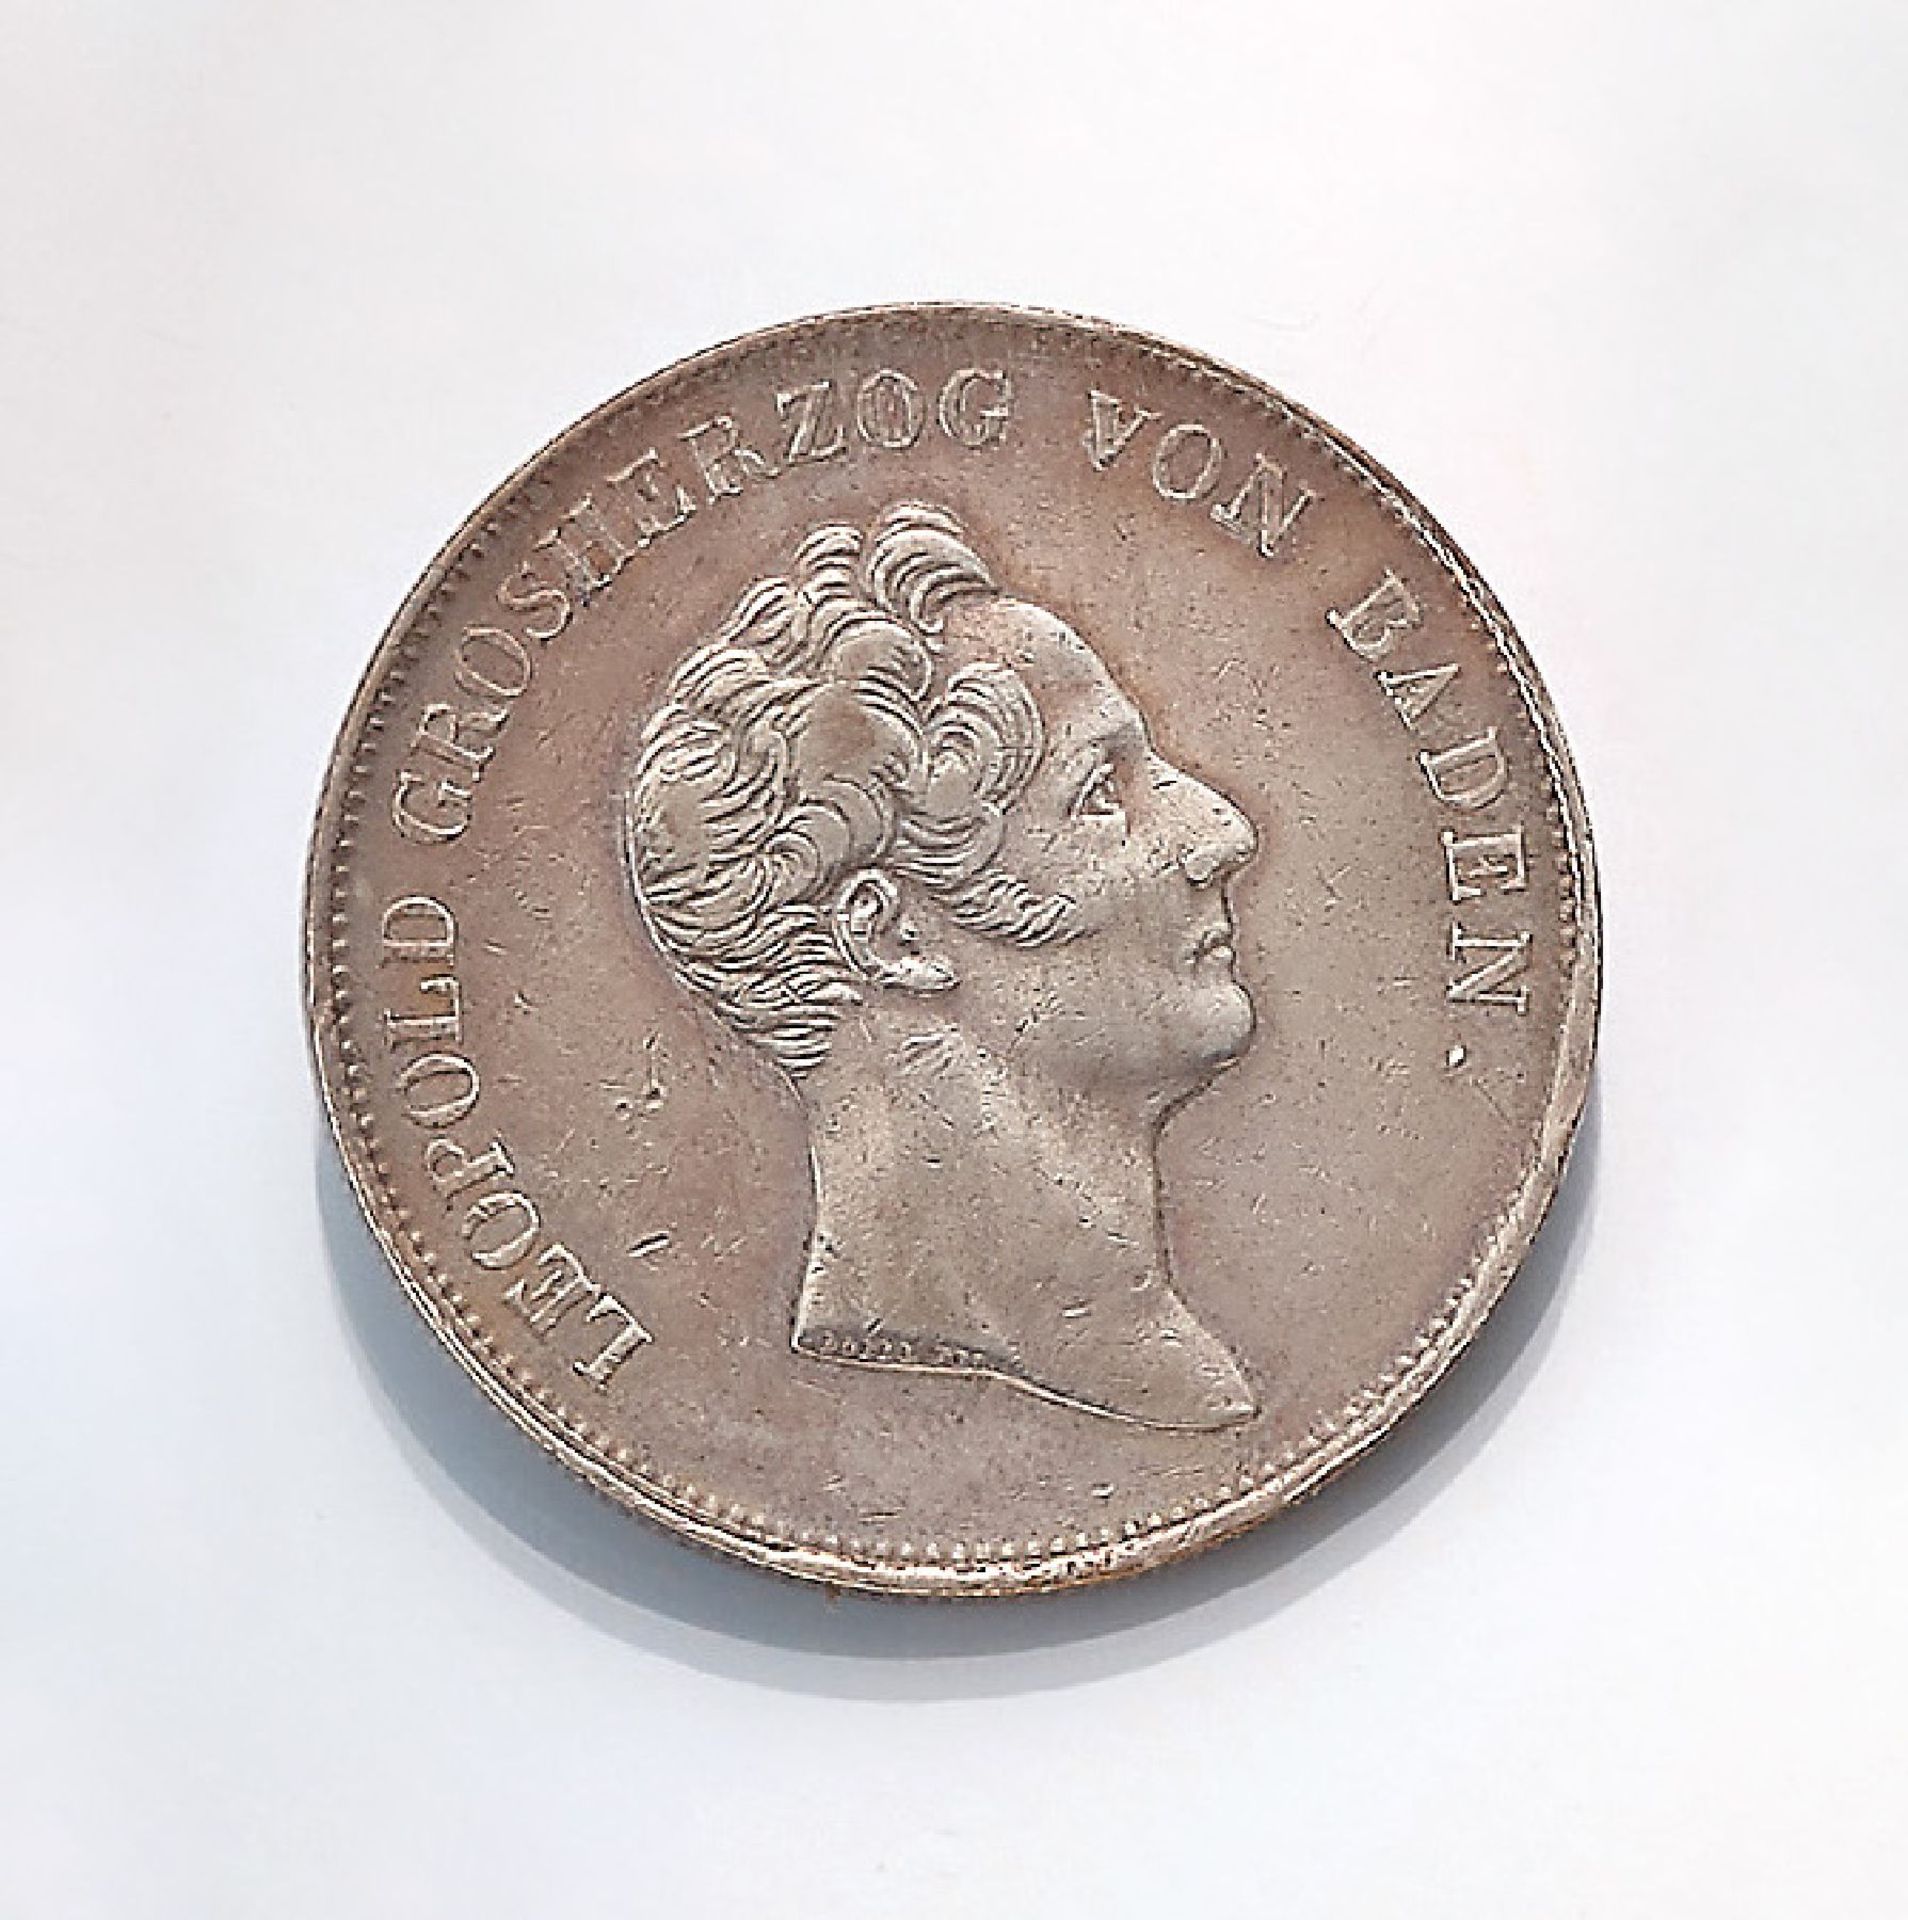 Silver coin , 1 Kroner-Thaler, Baden, 1834, Leopold grand duke of Baden, small mark on therim